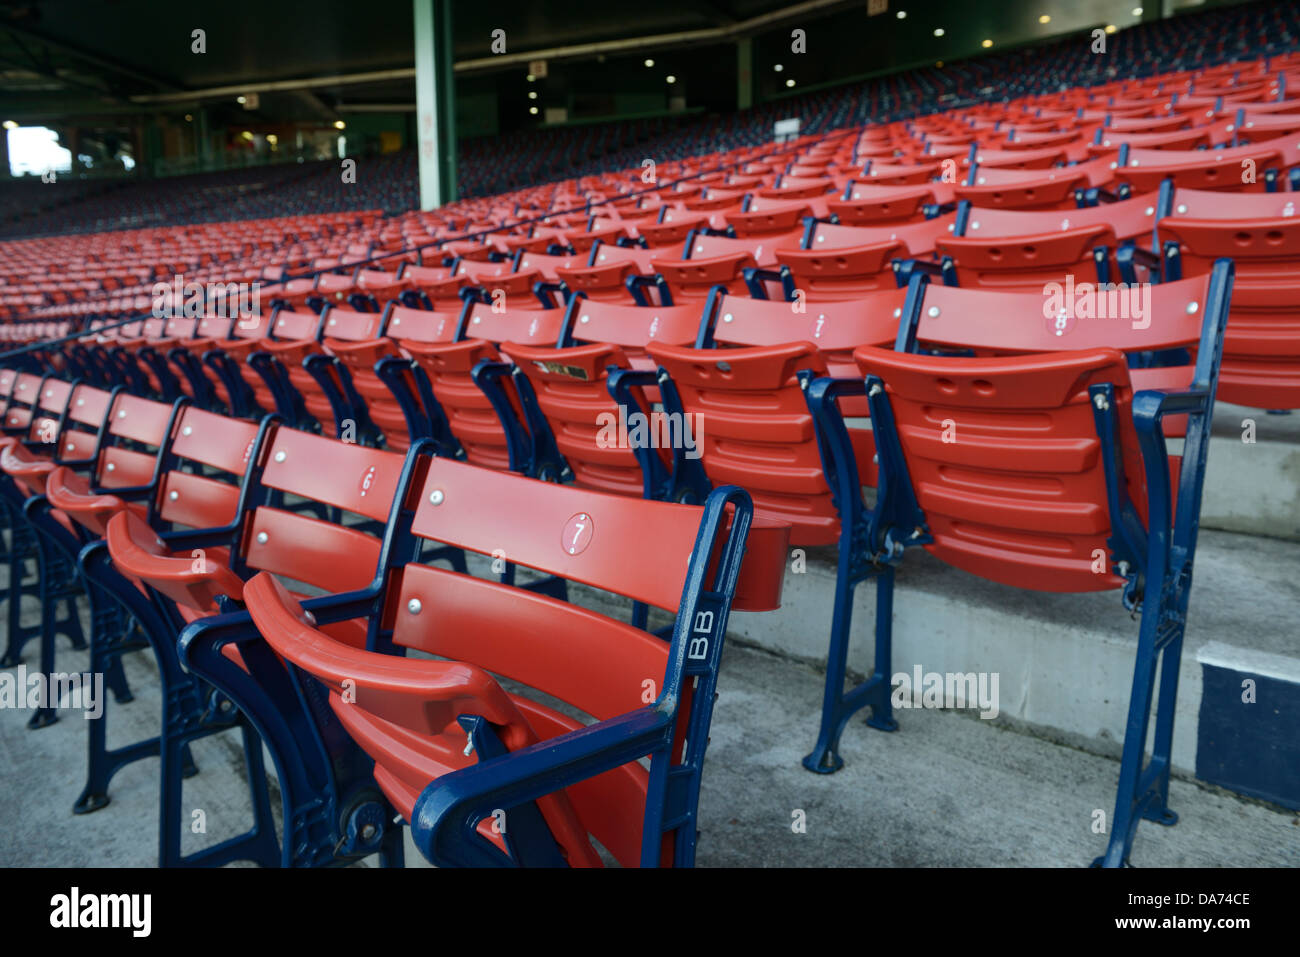 Fenway Park, Boston Massachusetts, home field of the Boston Red